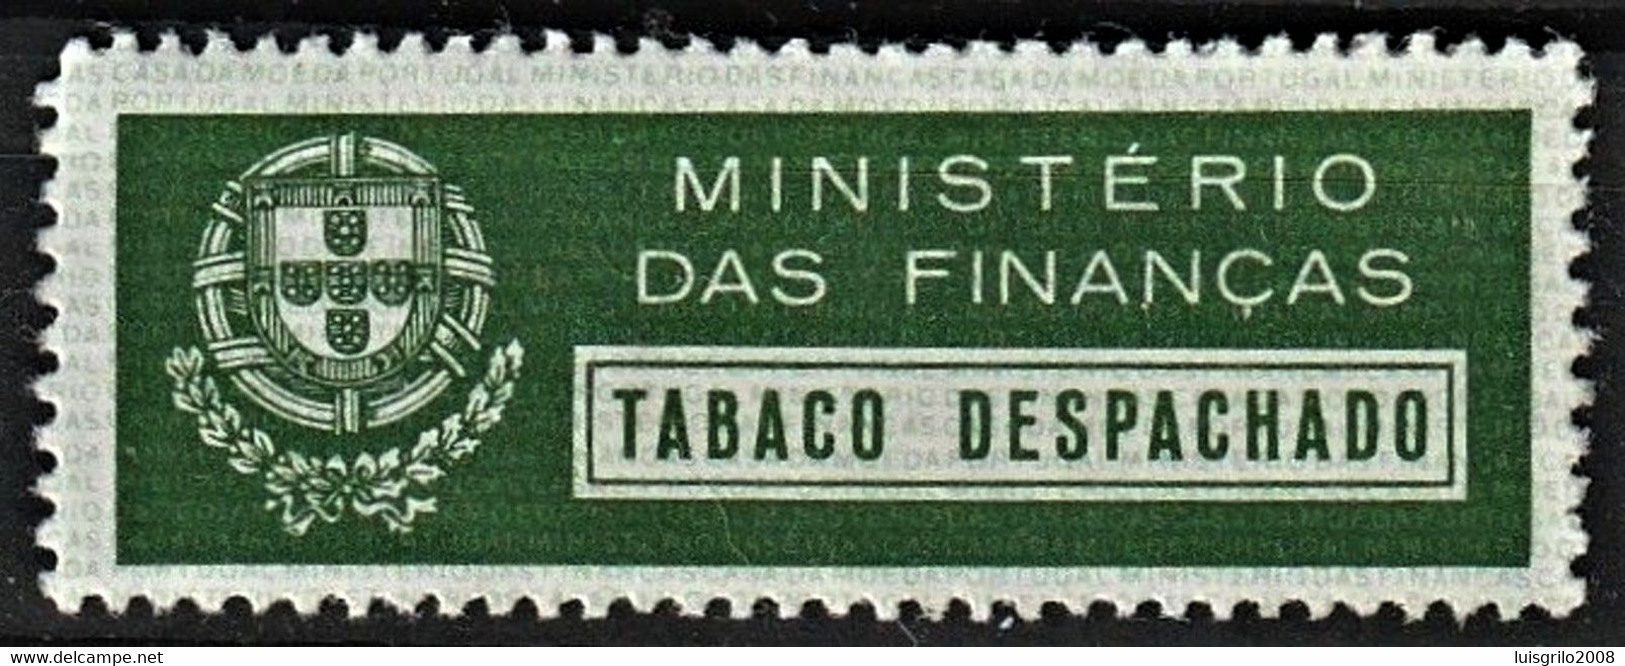 Fiscal/ Revenue, Portugal - Tabac/ Tobacco Tax, Imposto Sobre Tabaco - |- 1948, Tabaco Despachado - Novo, MNH** - Ongebruikt